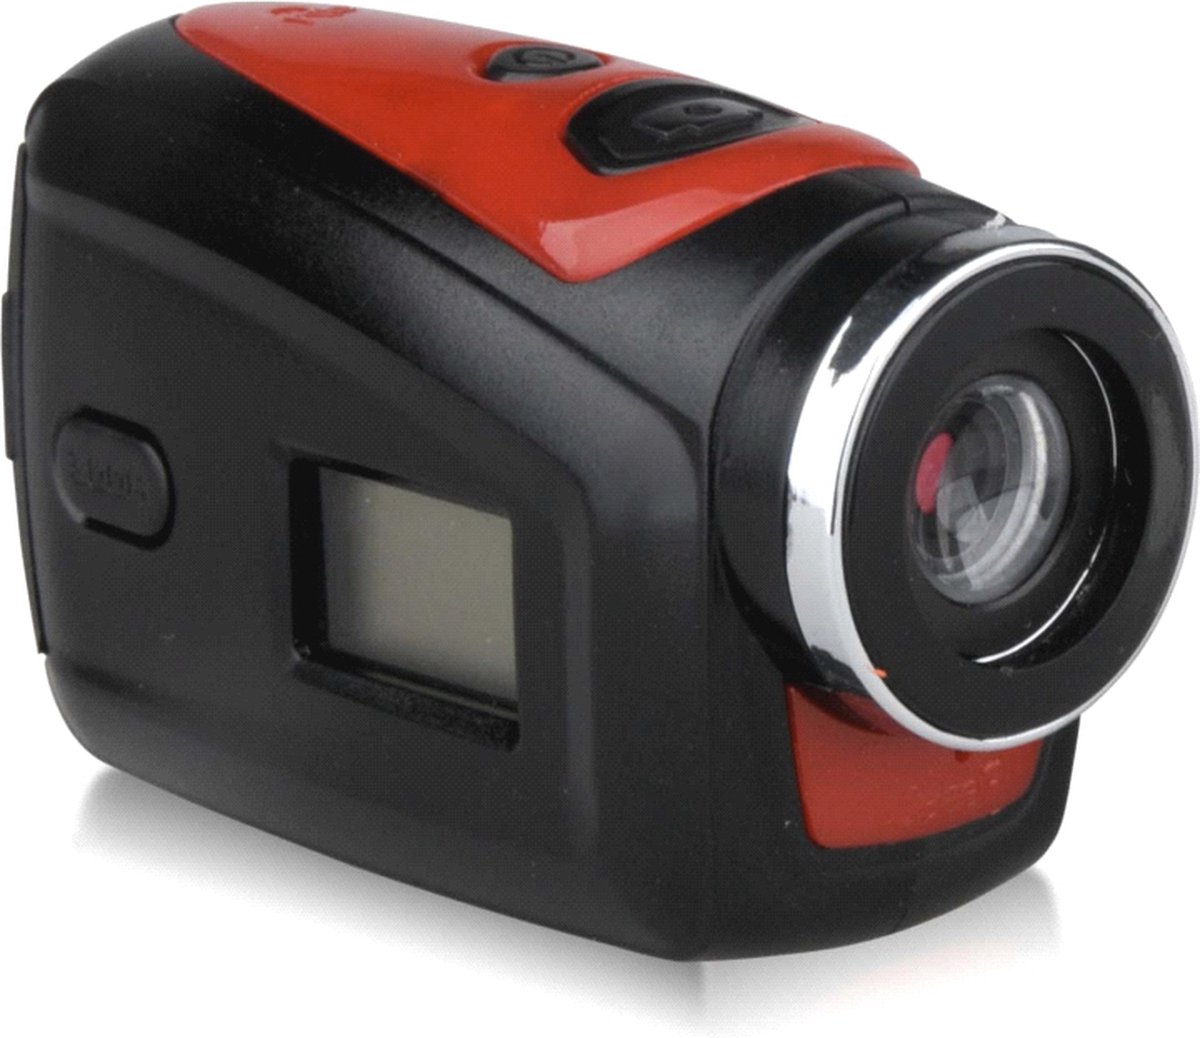 Clip Sonic X92PC caméra de sports d'action HD CMOS 1,3 MP 350 g | bol.com